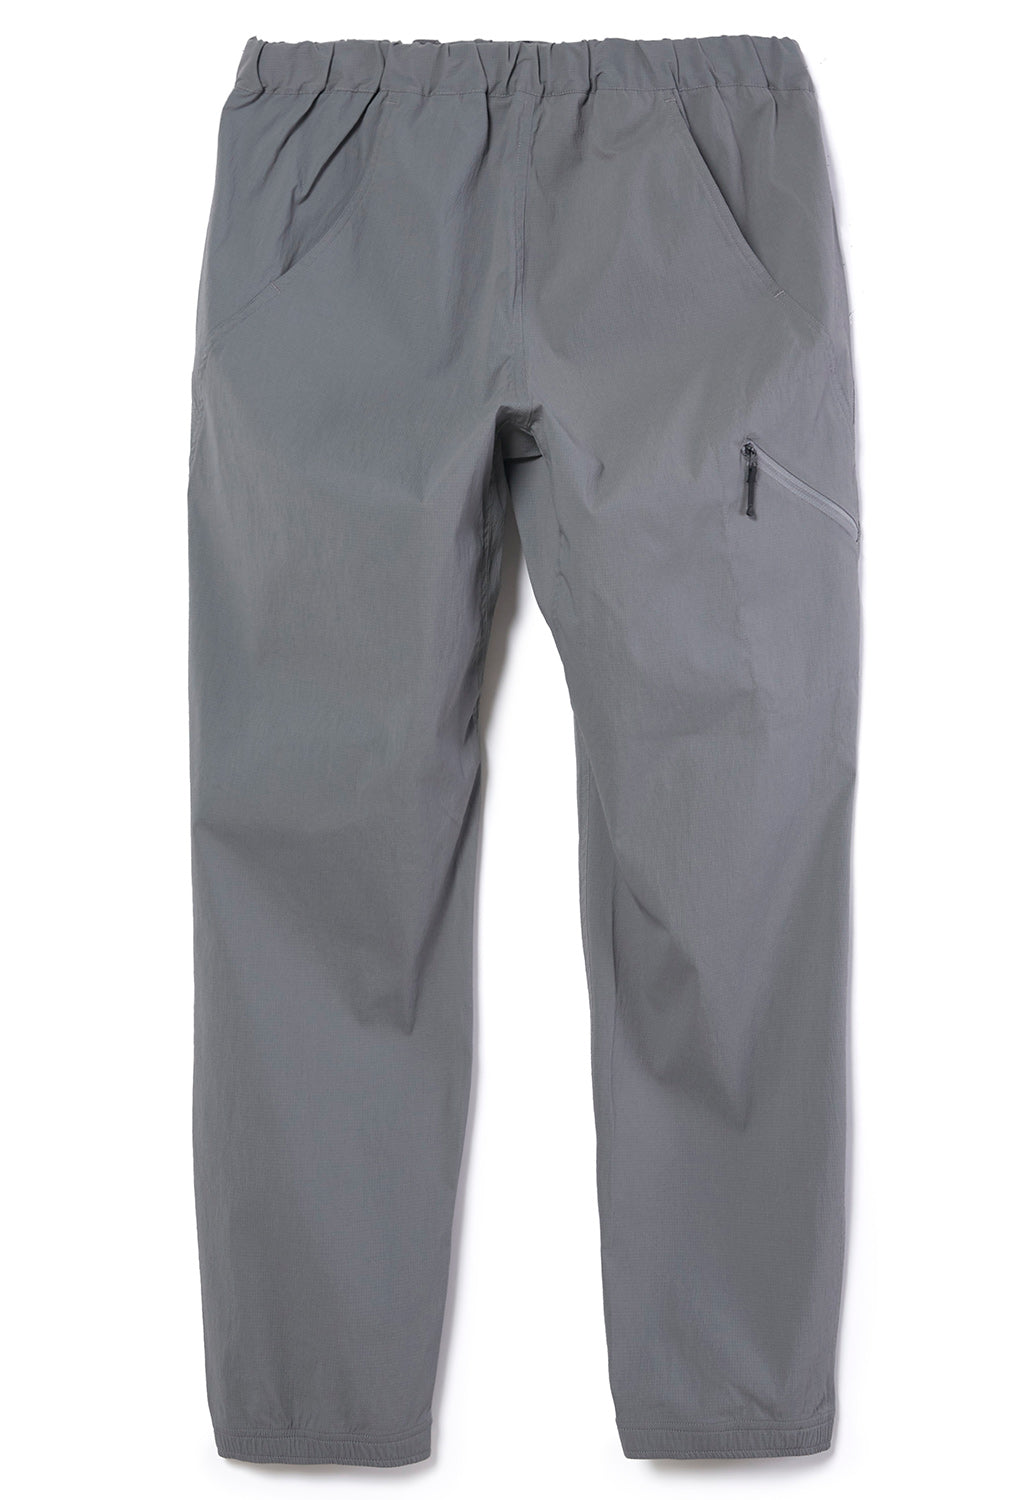 Goldwin Men's Cordura Stretch Pants - Foliage Grey